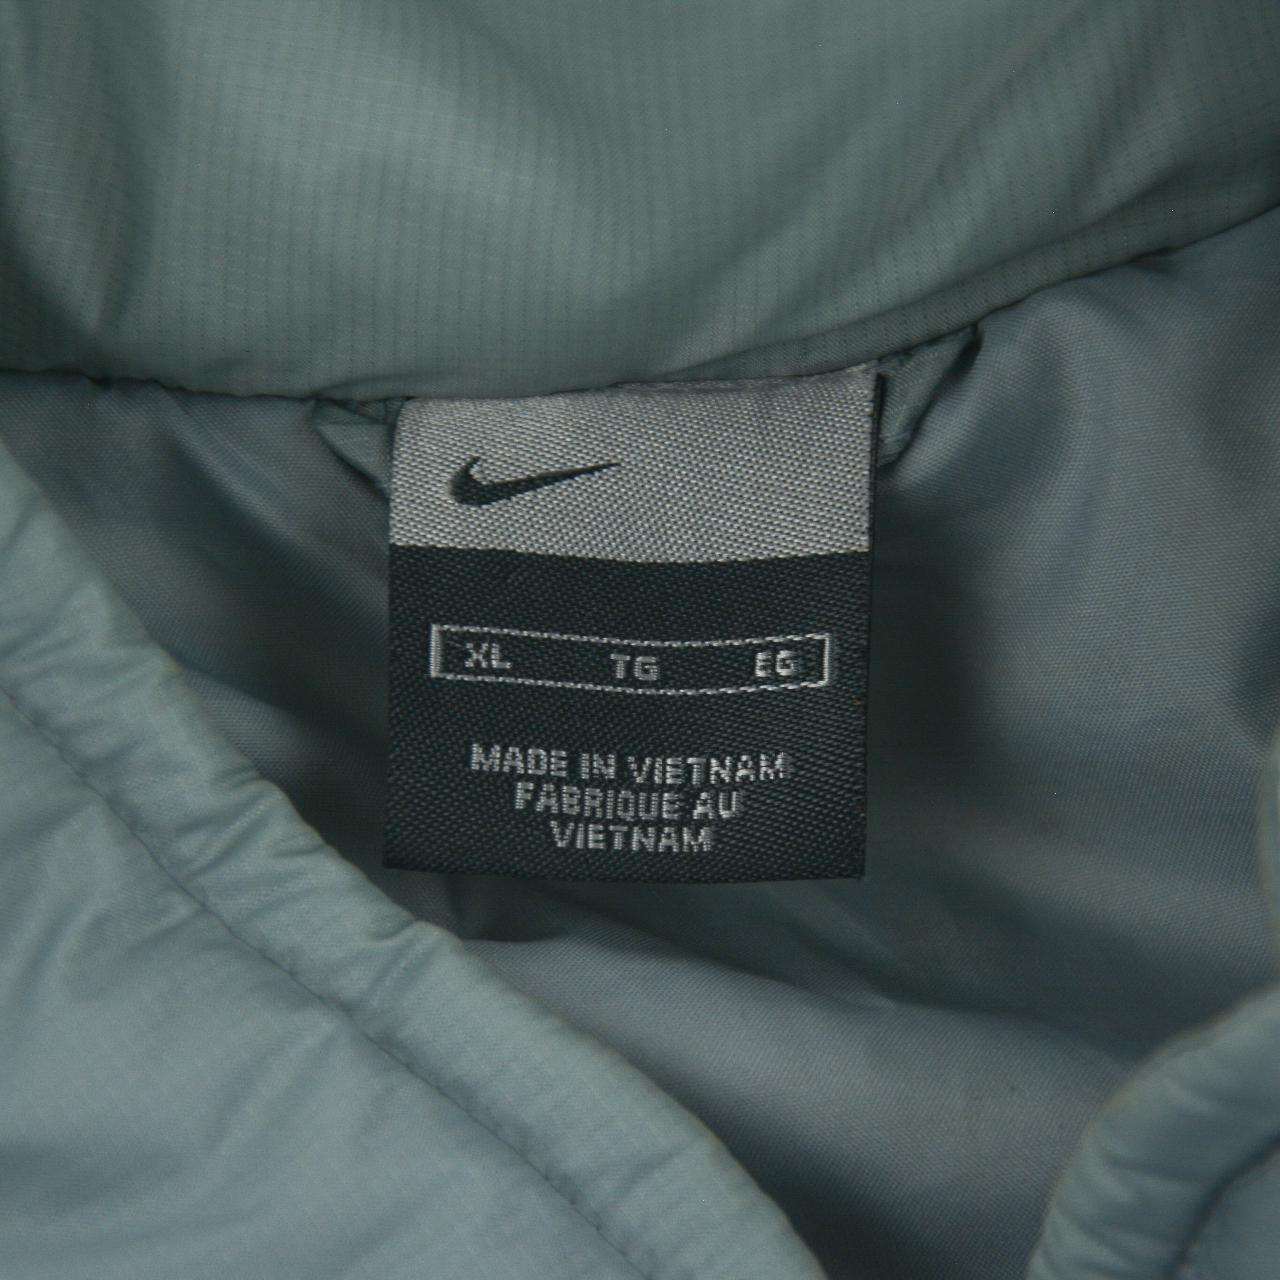 Vintage Nike Puffrr Jacket Size XL - Known Source